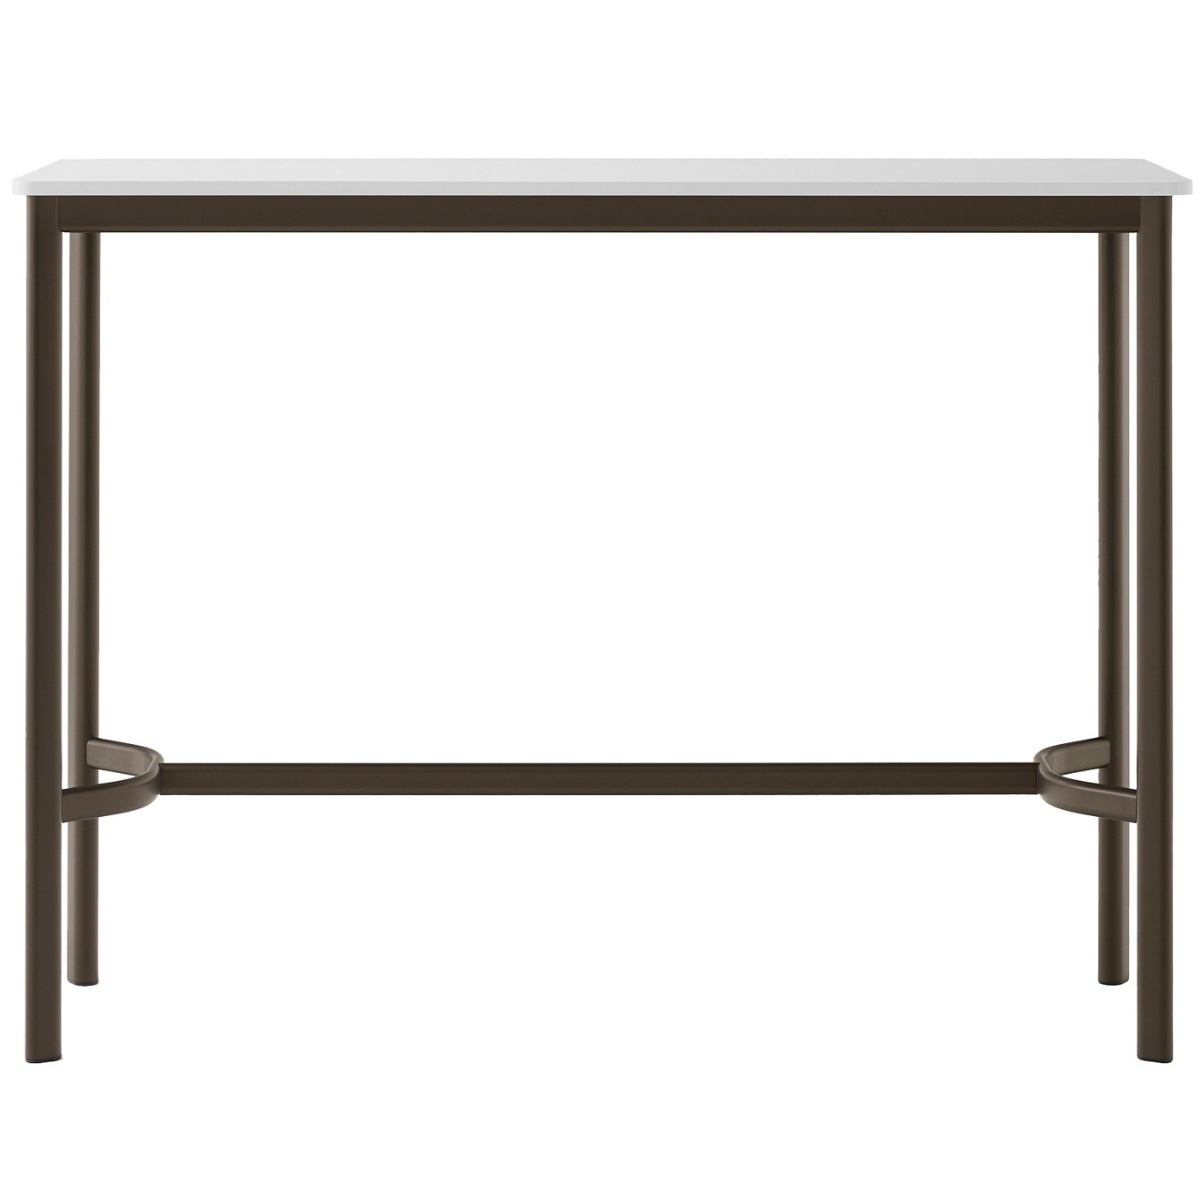 https://www.fundesign.nl/media/catalog/product/t/r/tradition-drip-bar-table-hw113-140x50x105-black-nano-laminate-black-legs-8.jpg